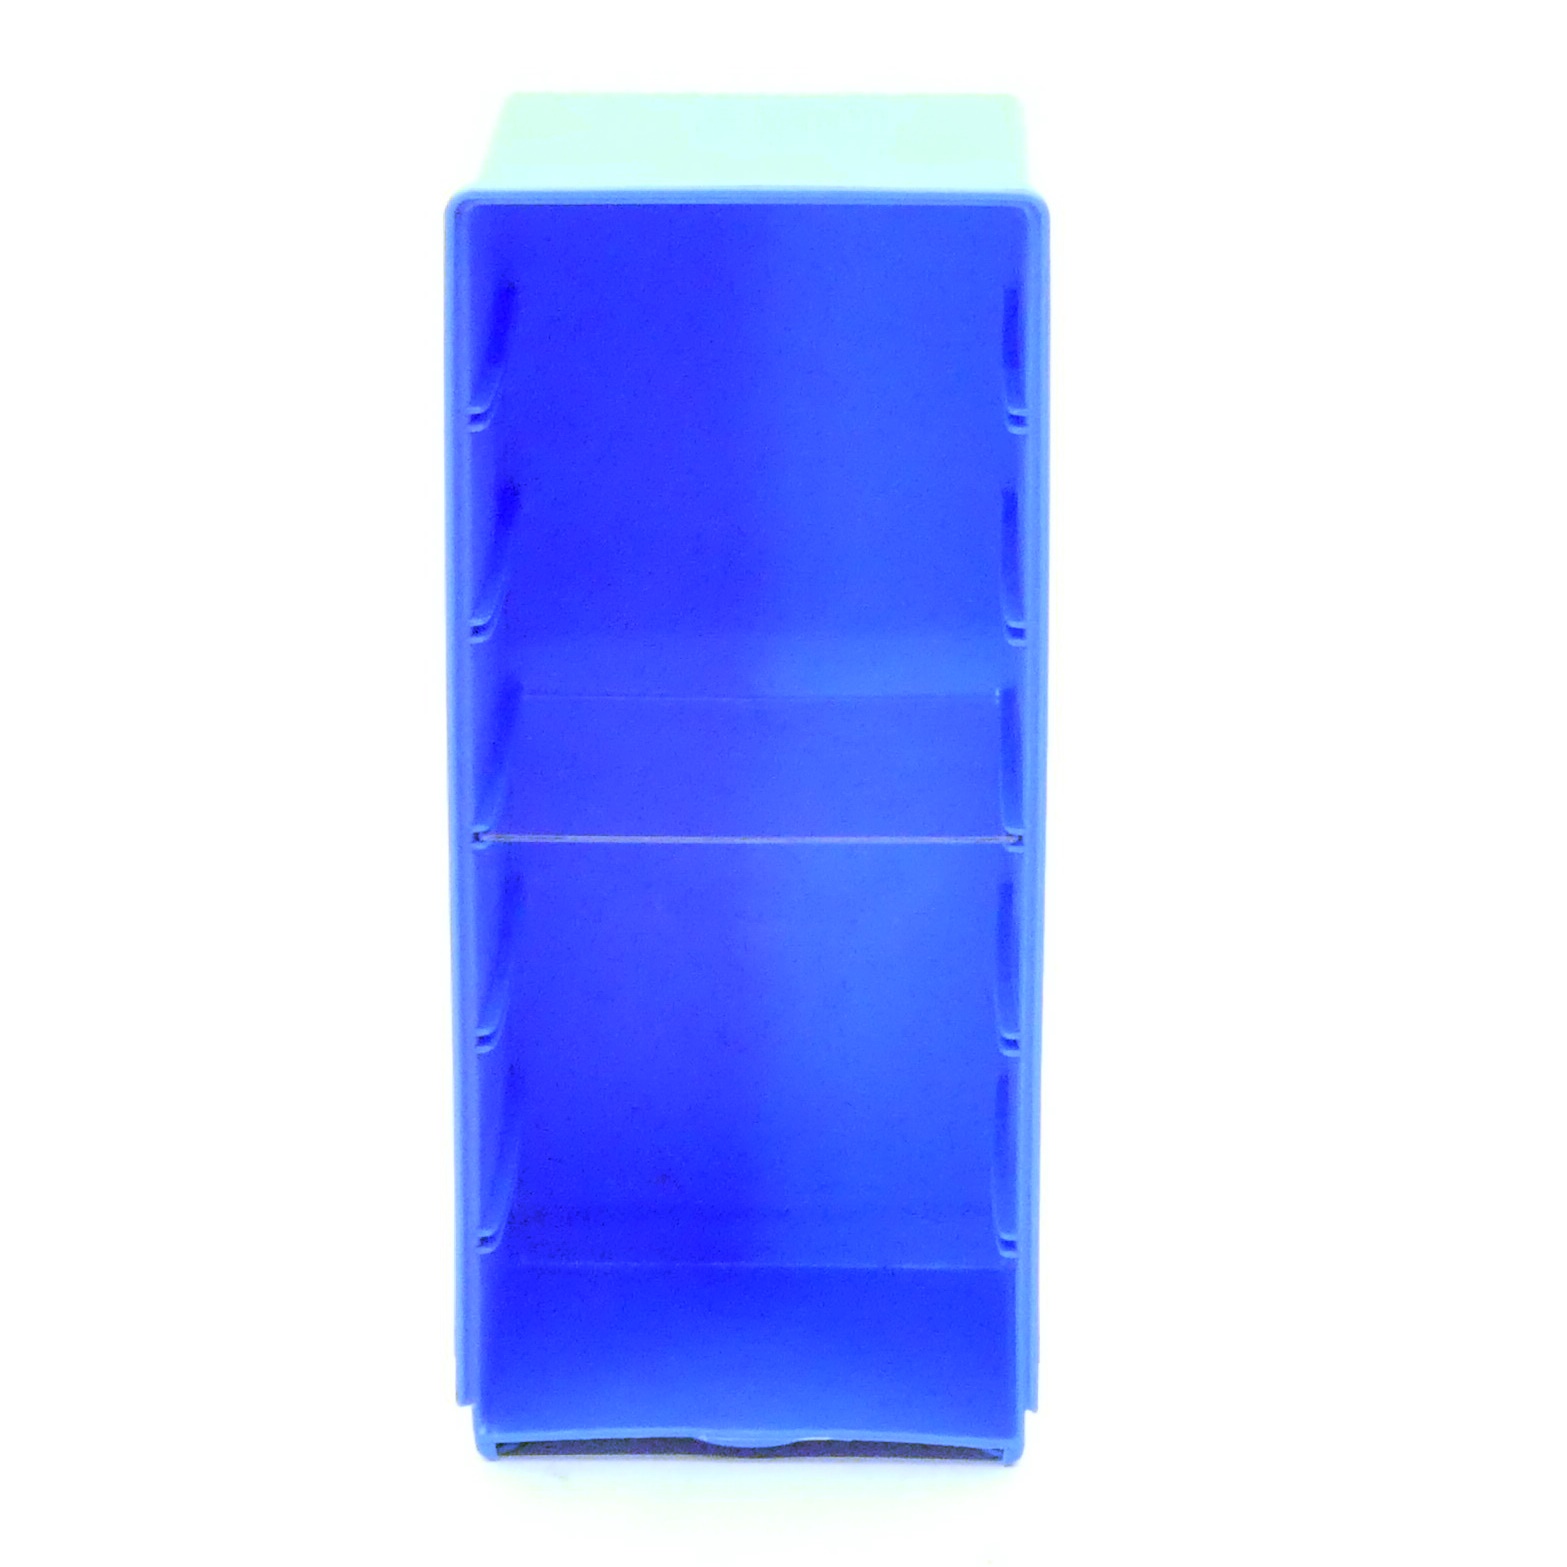 10 pieces boxes RK 300, 6 compartments, blue 